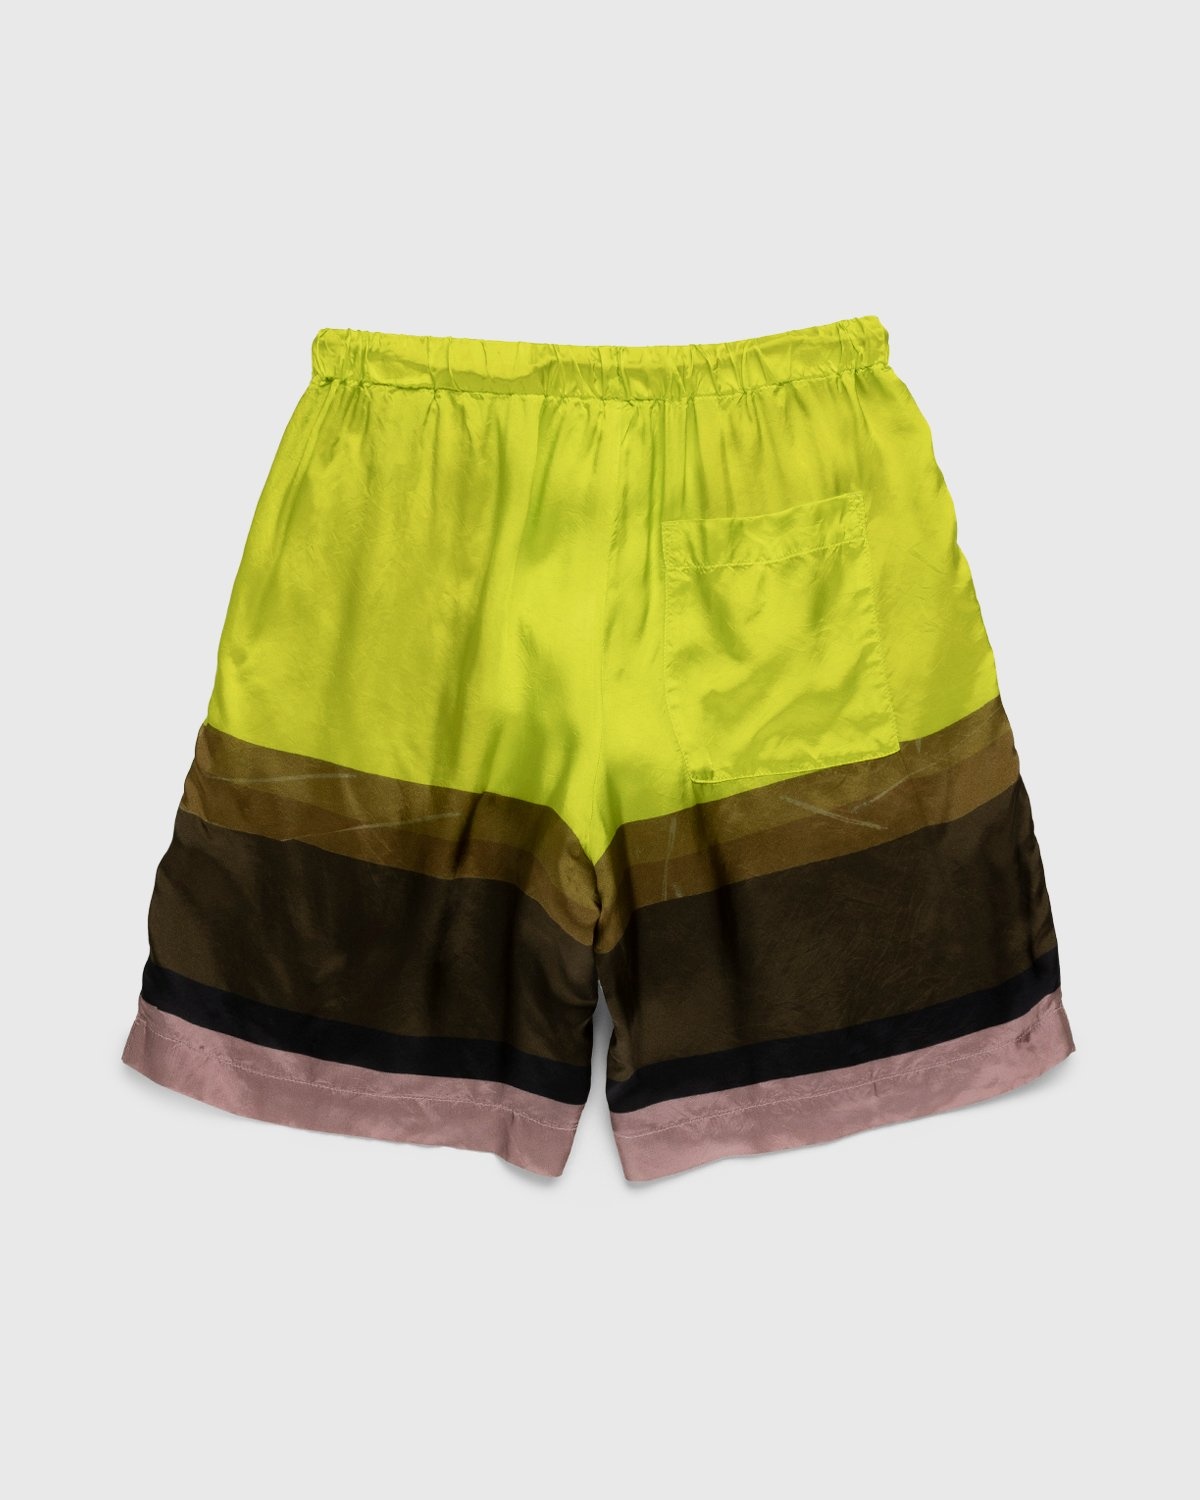 Dries van Noten – Piperi Shorts Yellow - Shorts - Yellow - Image 2